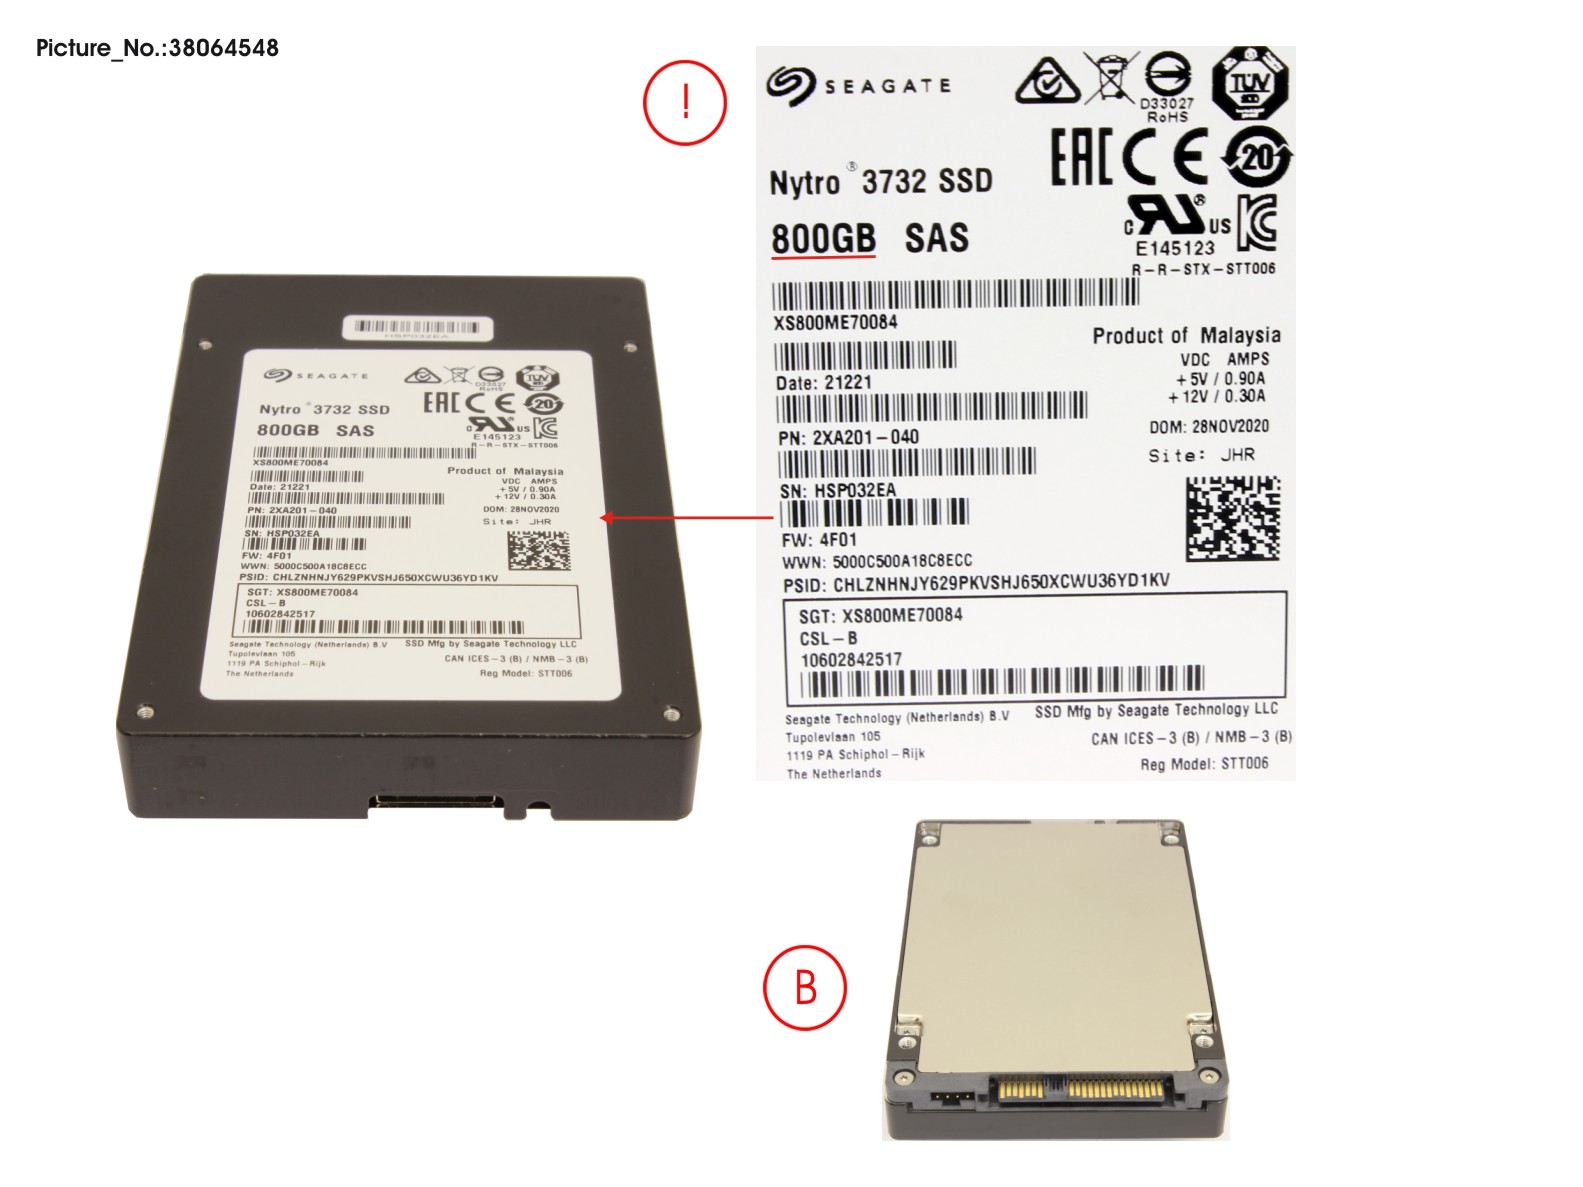 SSD SAS 12G WI 800GB